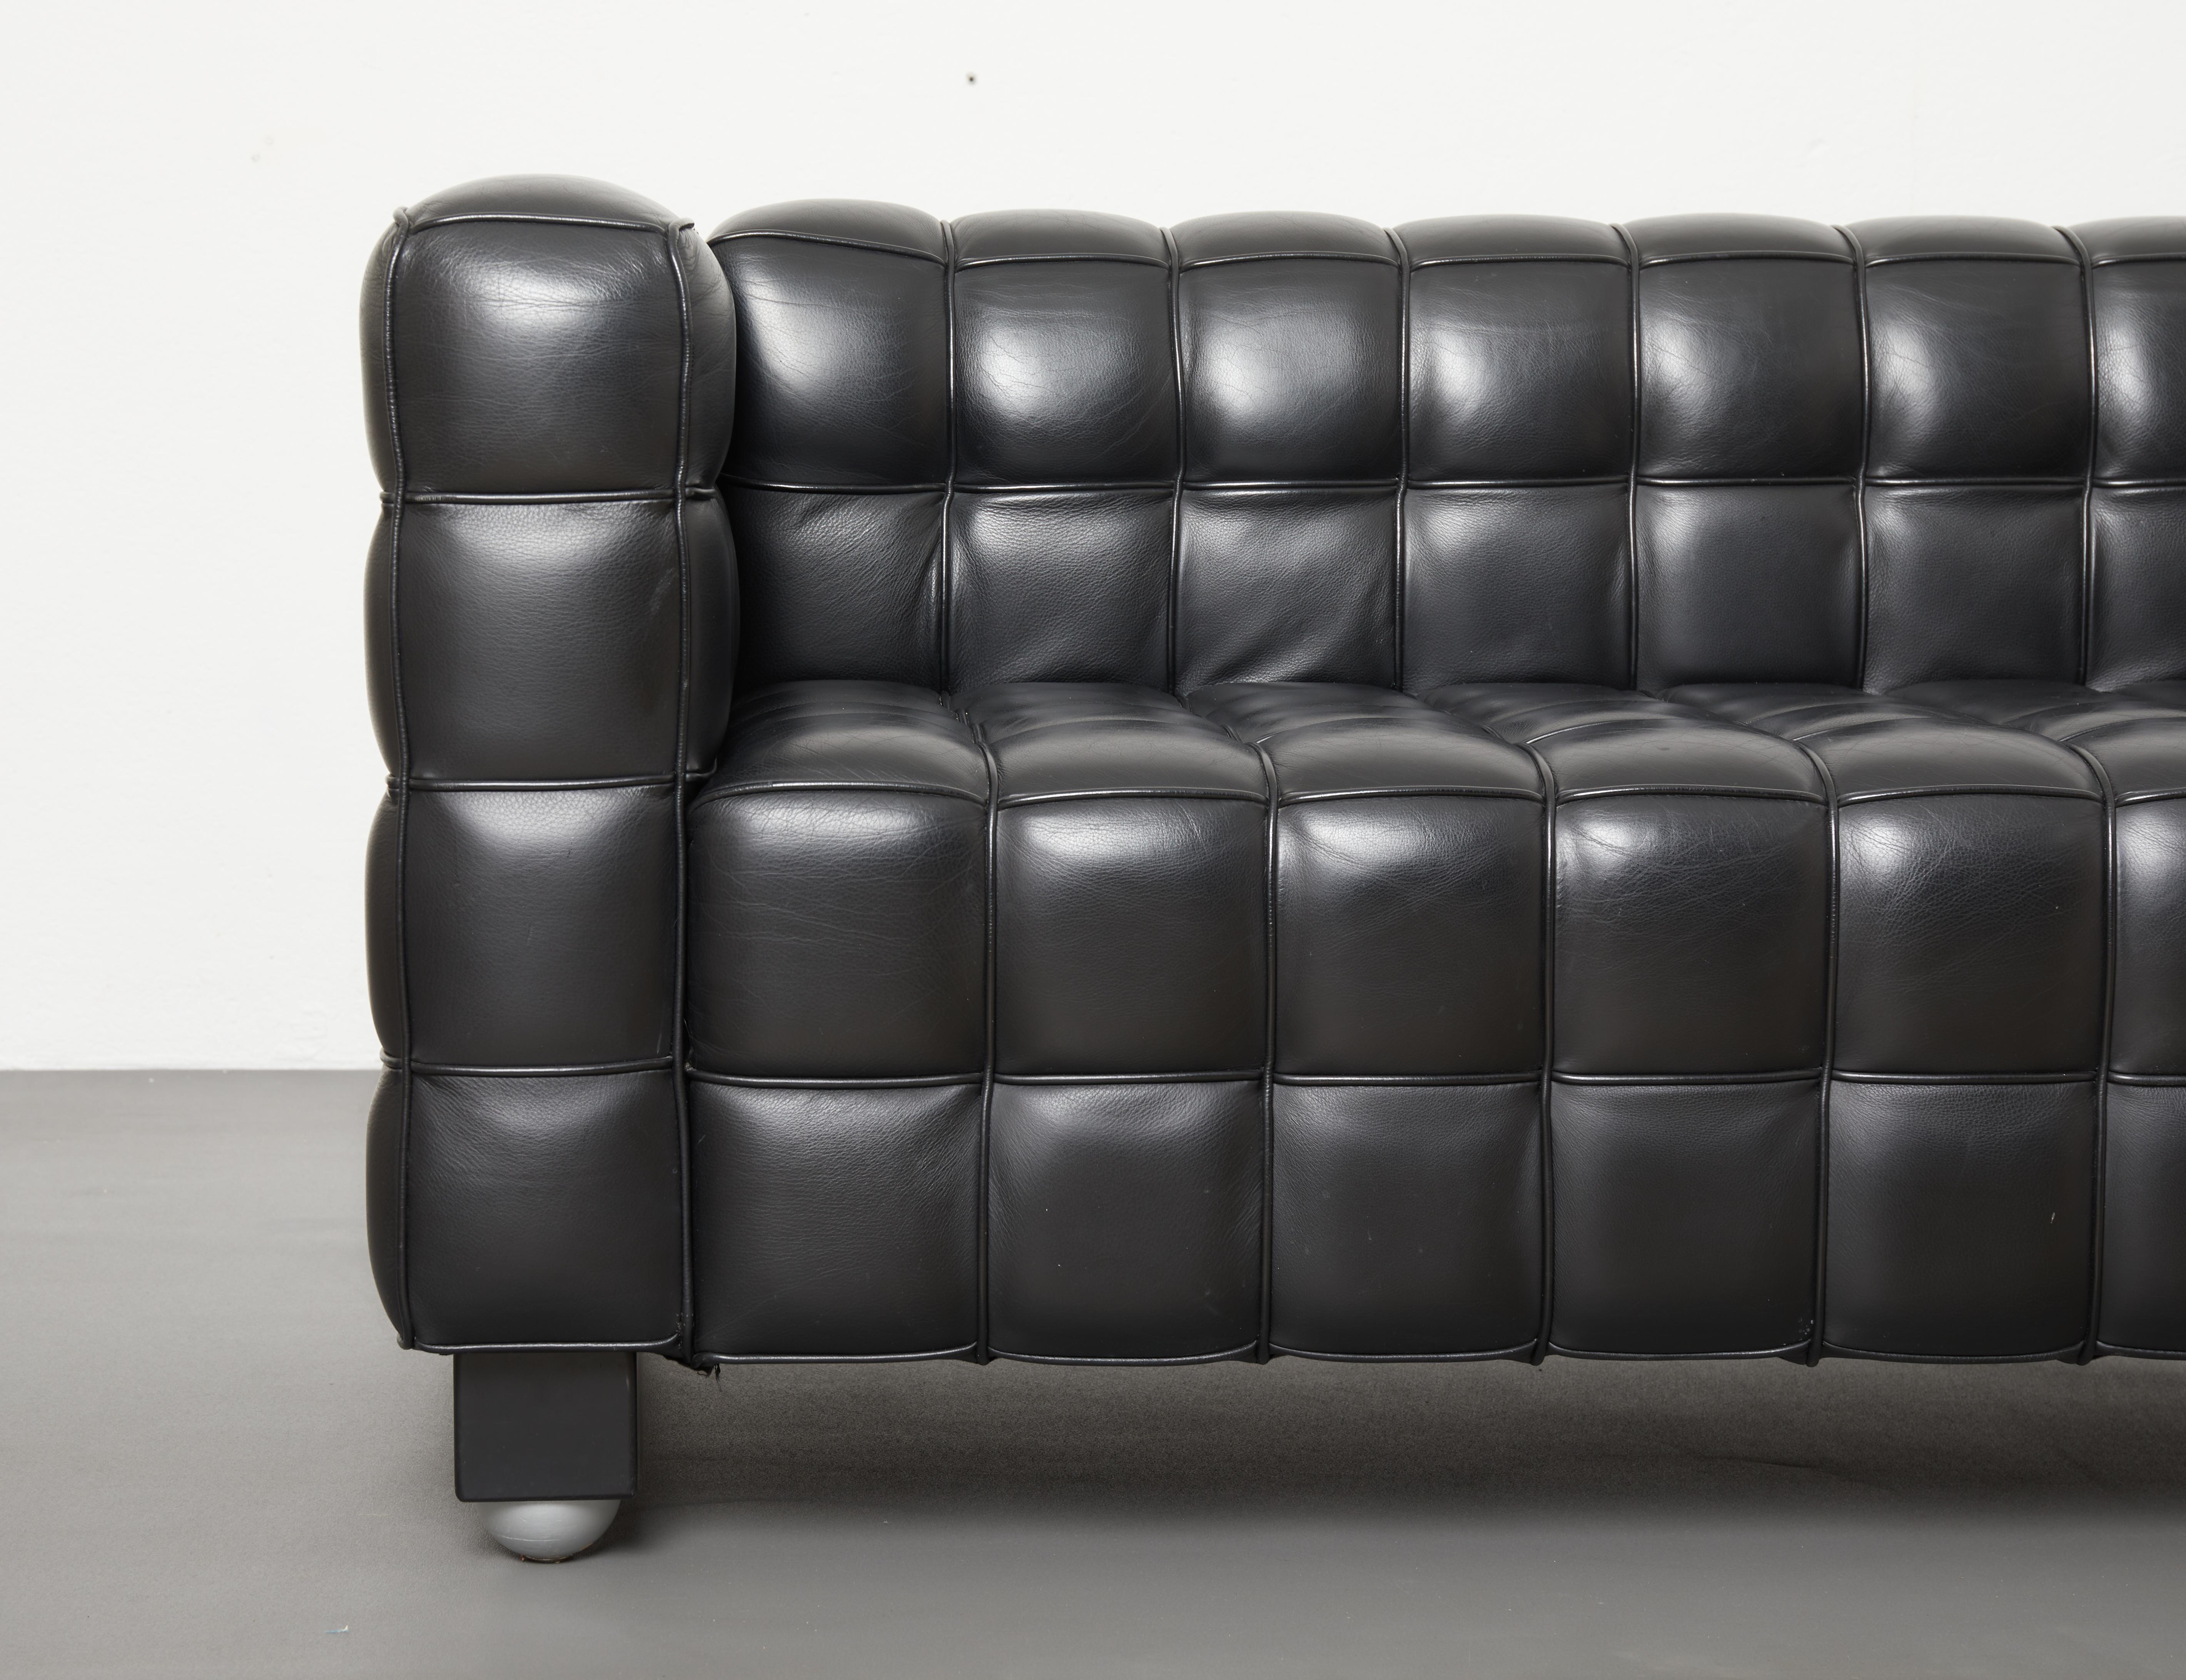 Austrian Mid-Century Modern Black Leather Kubus Sofa by Josef Hoffmann, Wittmann c.1980 For Sale